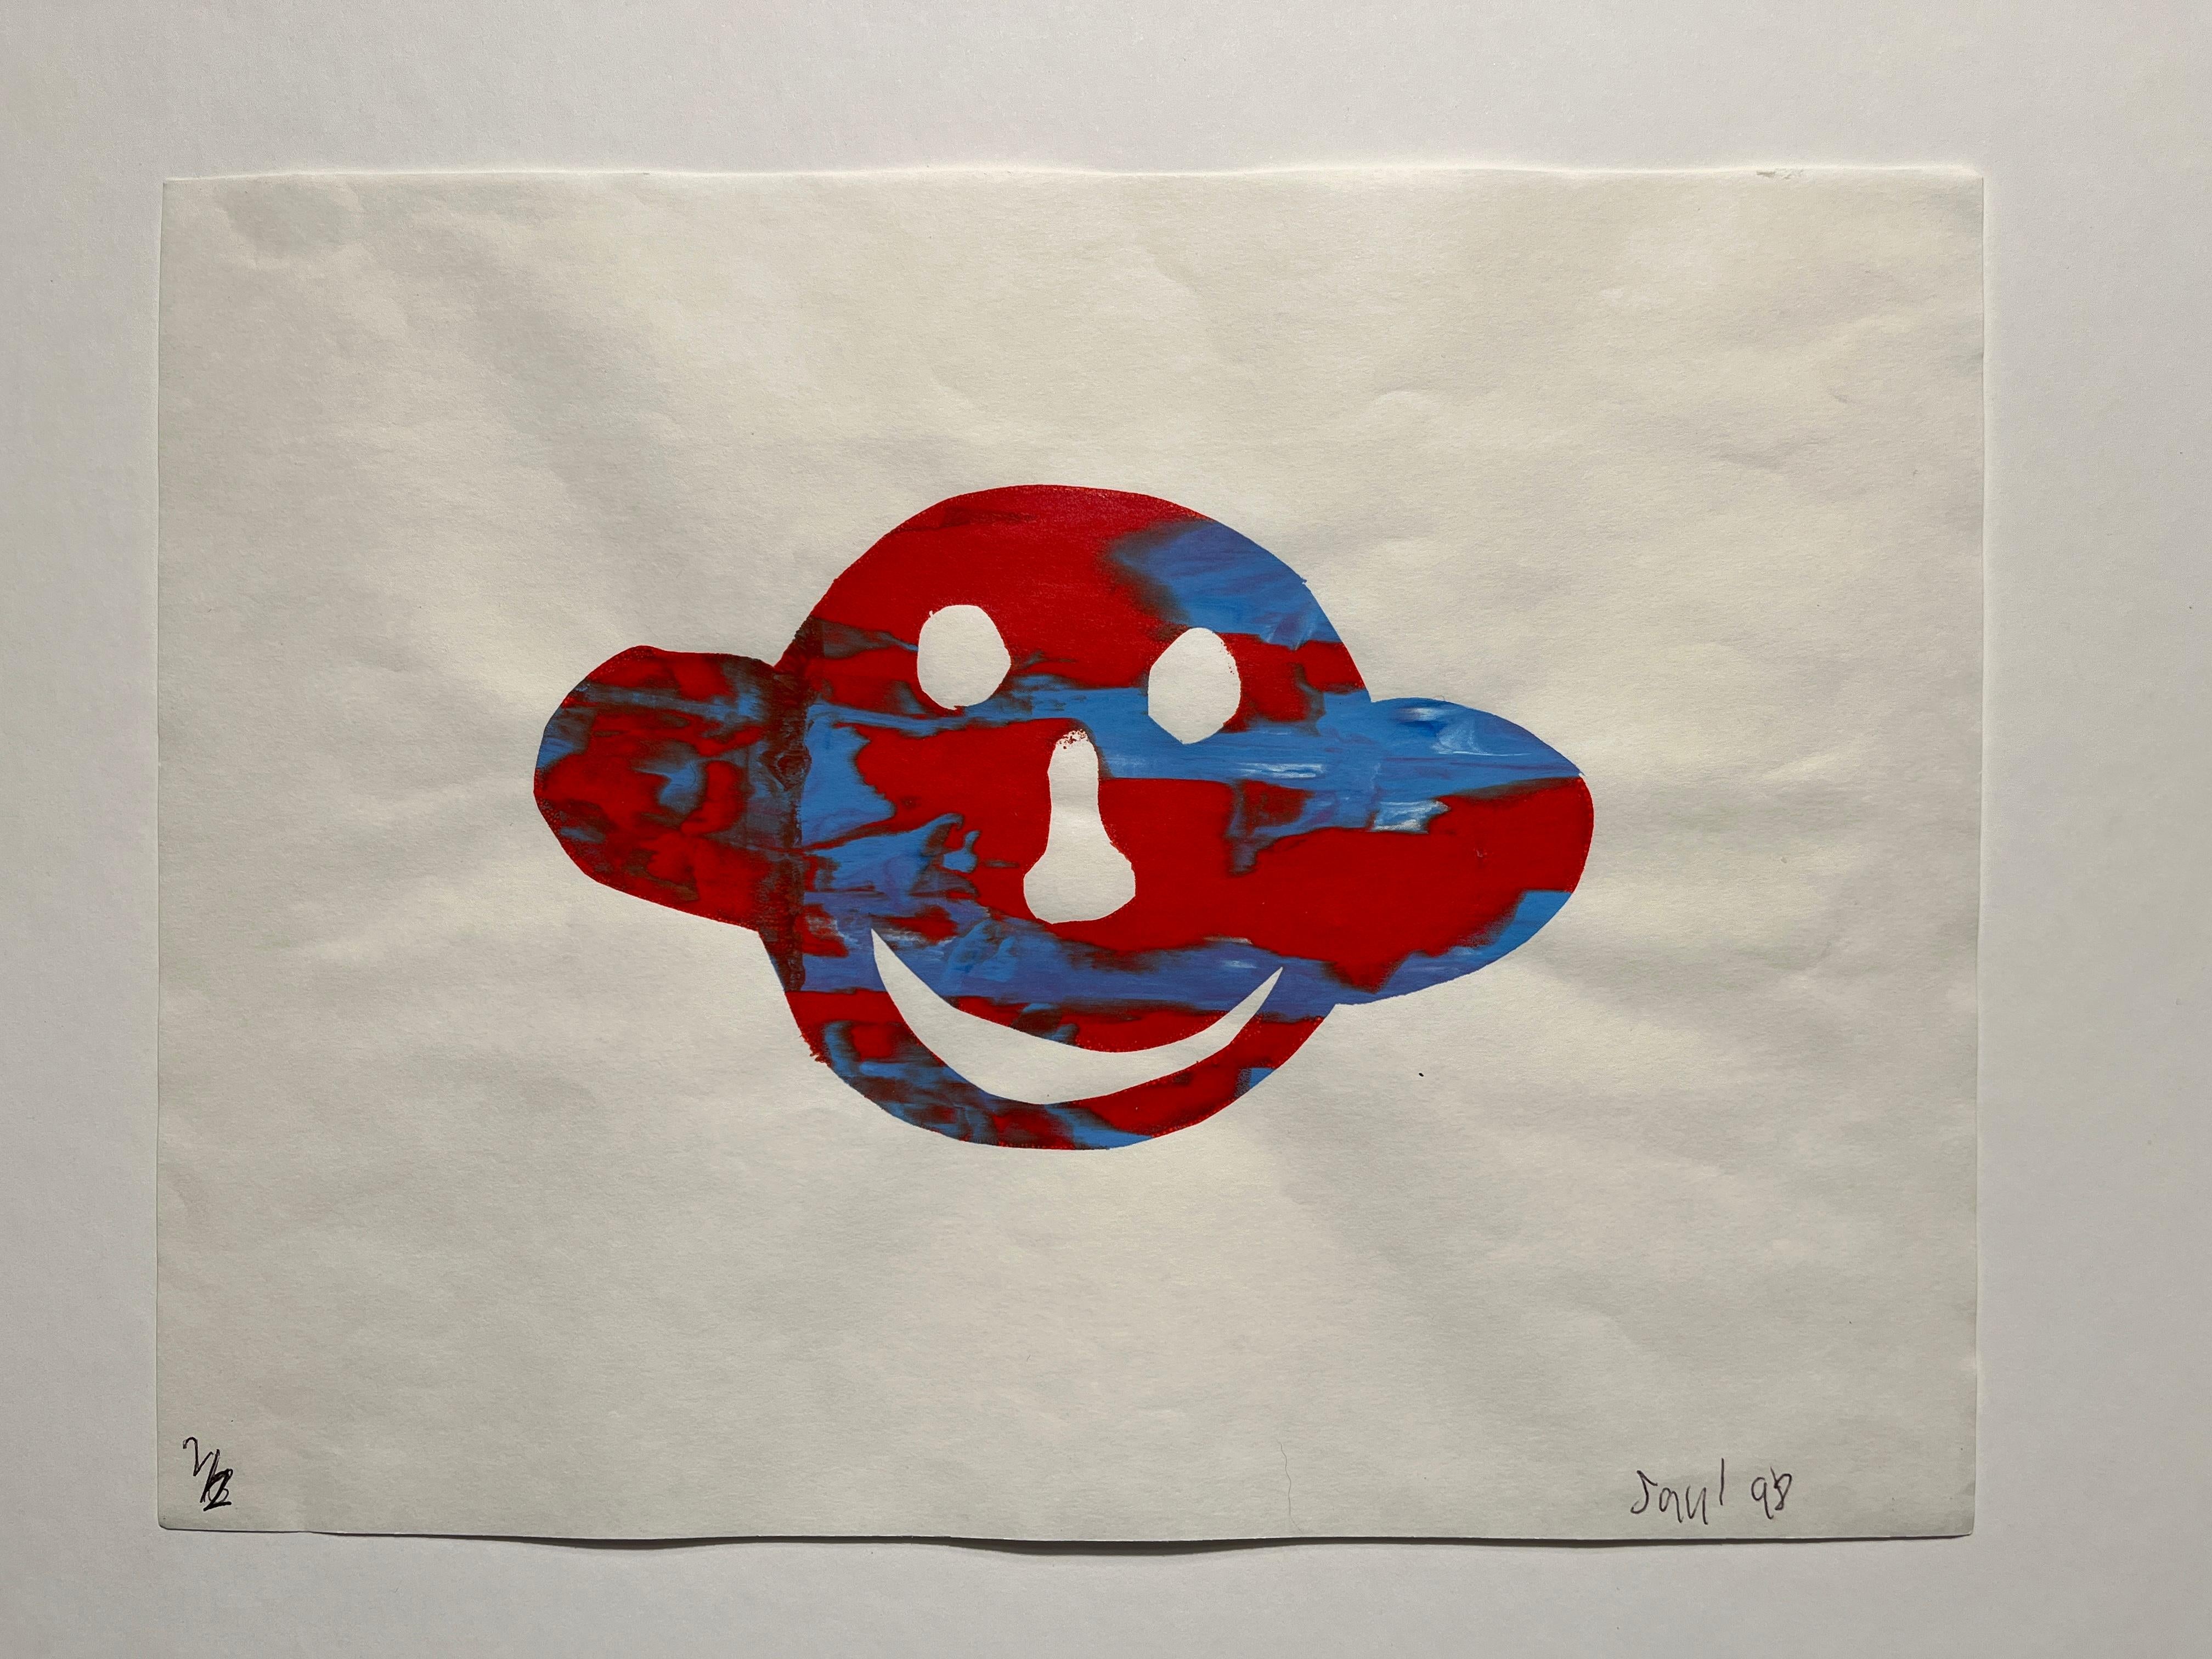 Saul Abstract Print - 1998 "Happy Face" Abstract Woodcut Print